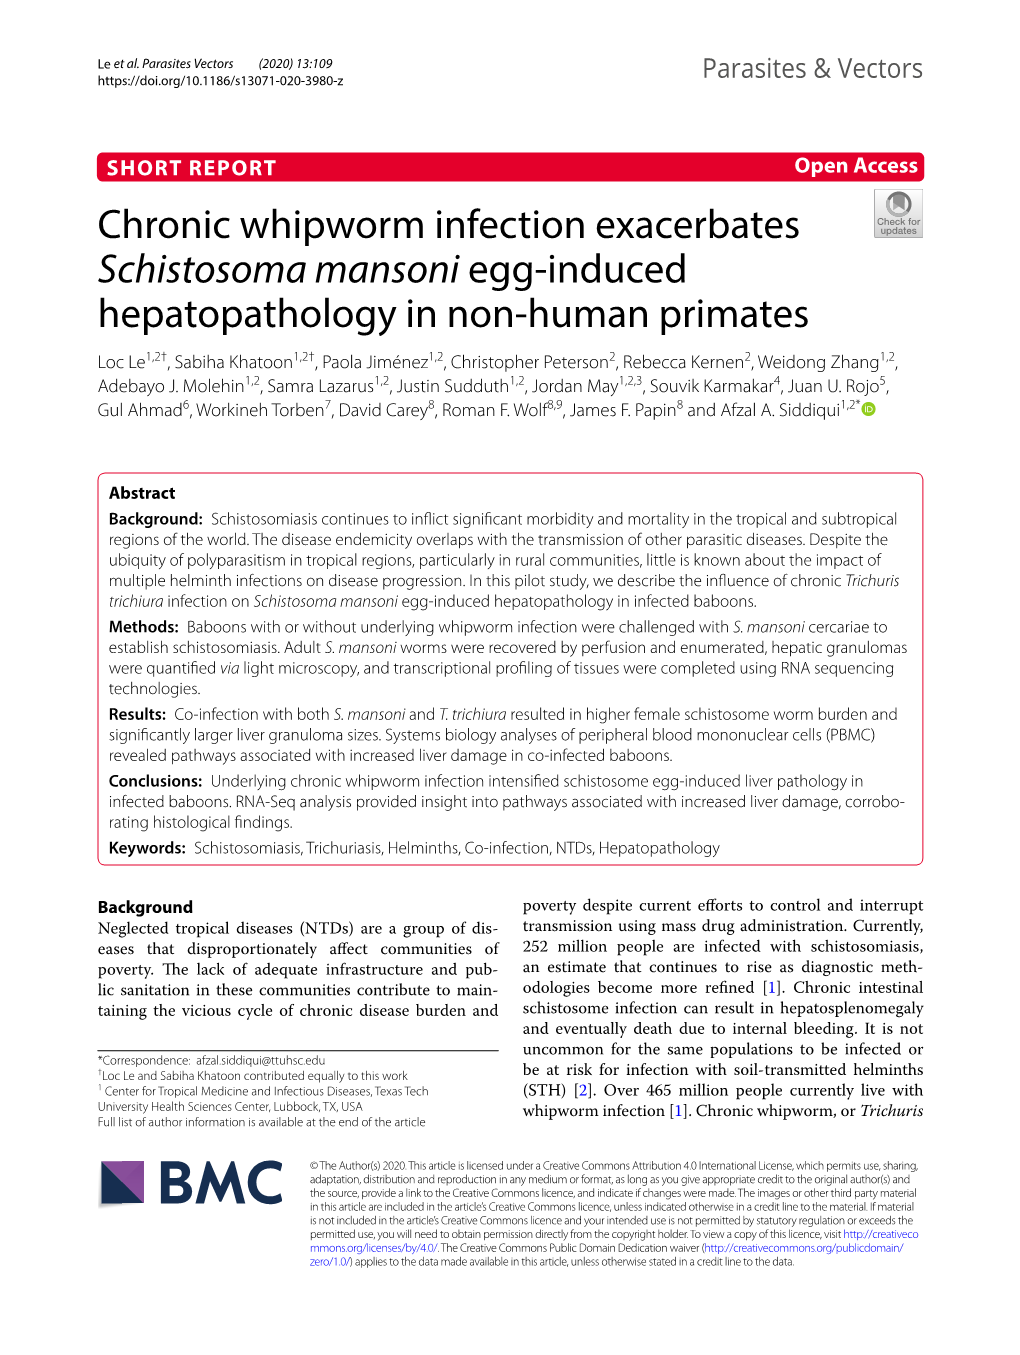 Chronic Whipworm Infection Exacerbates Schistosoma Mansoni